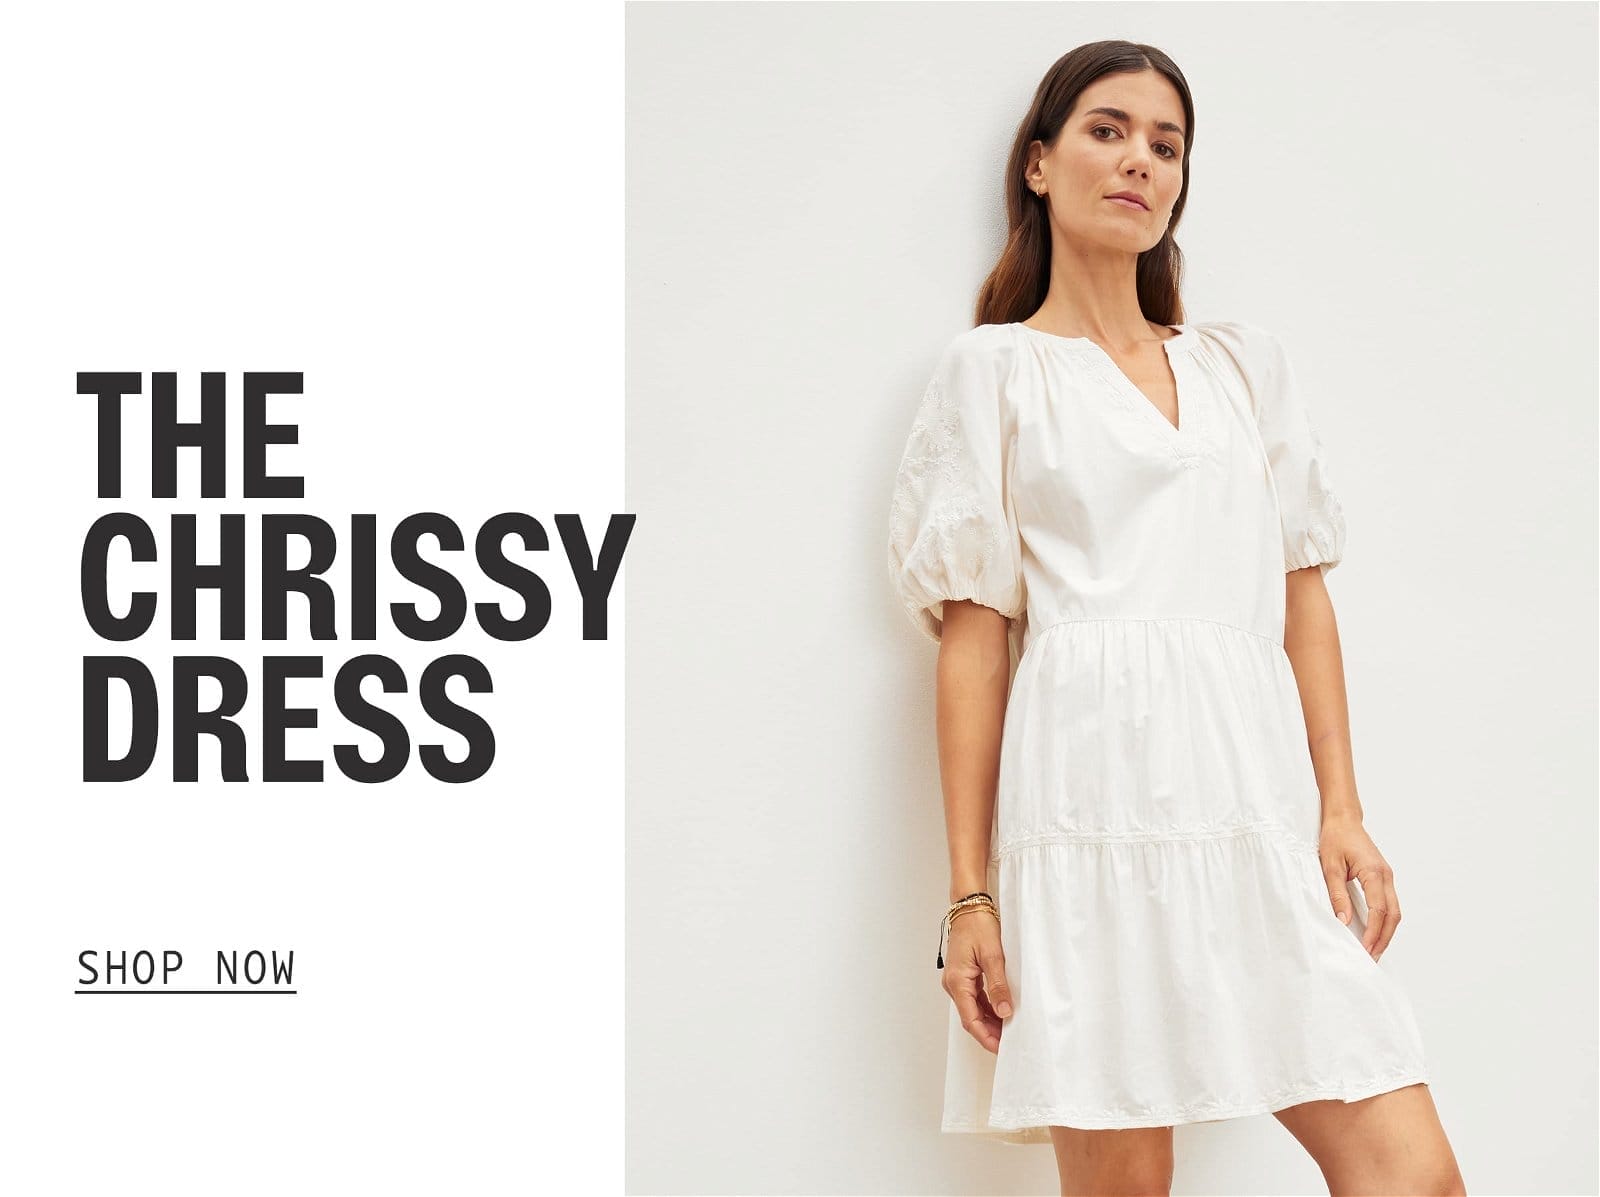 Model wearing the Chrissy Dress